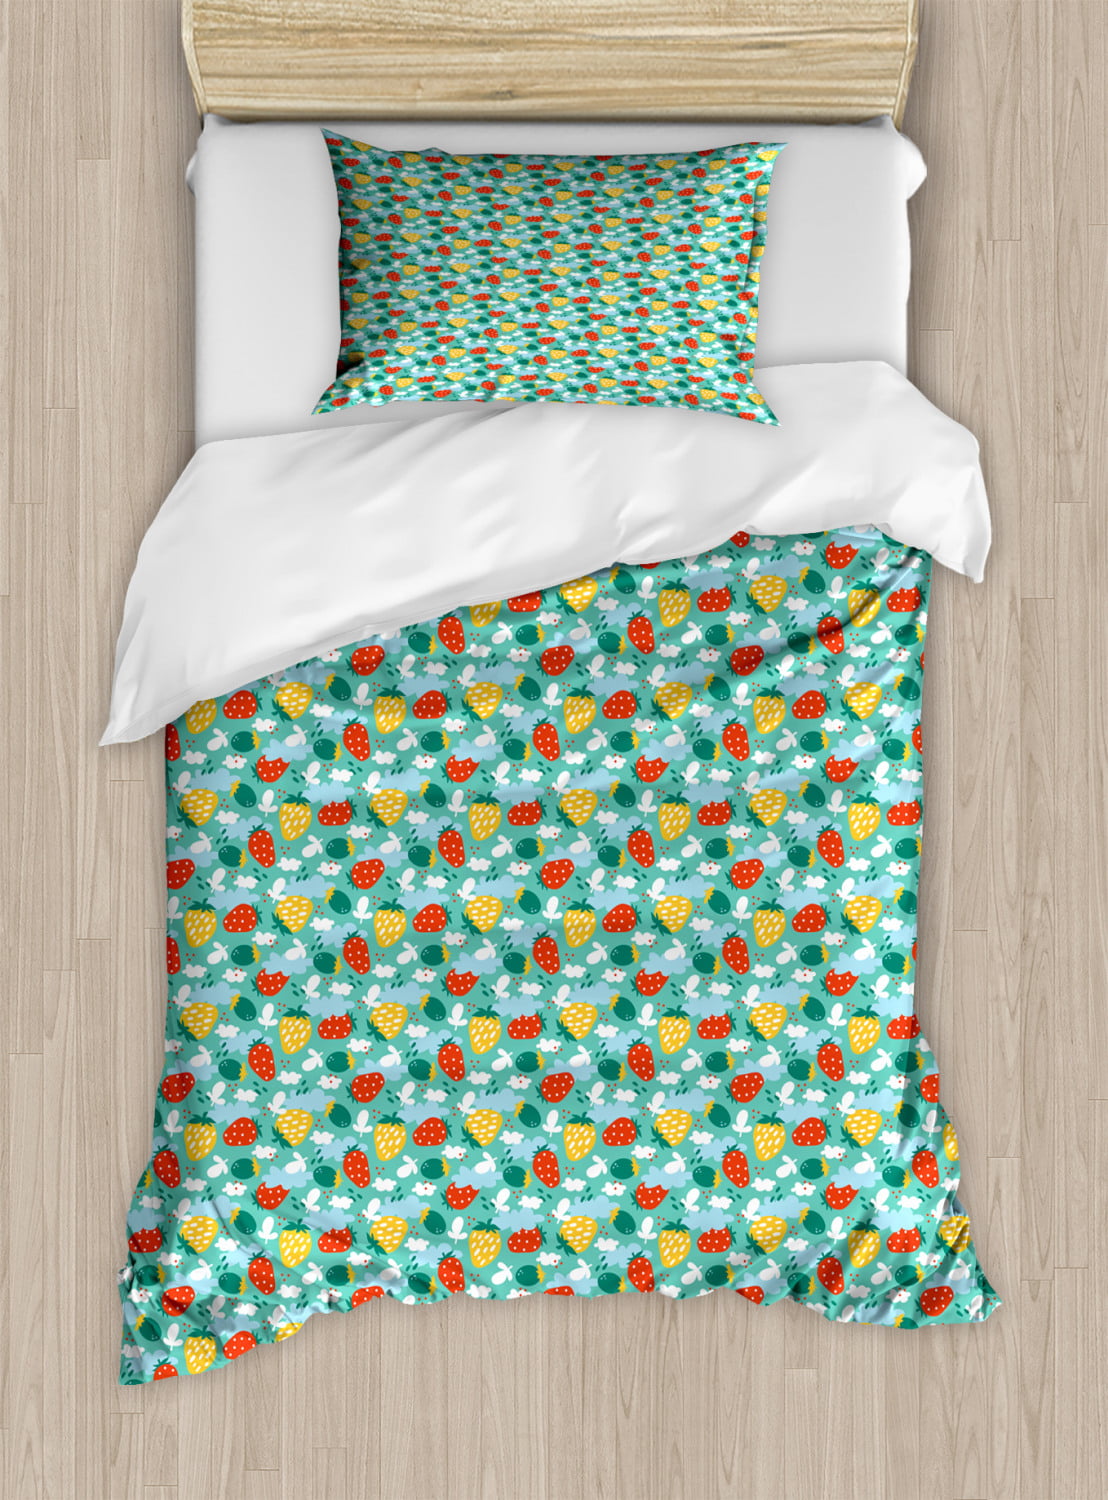 Persona 5 Joker Flannel Blanket Ultra Soft Anti-Pilling Keep Warm Blanket Microfiber Lightweight Blanket for Sofa Bed 60X50 